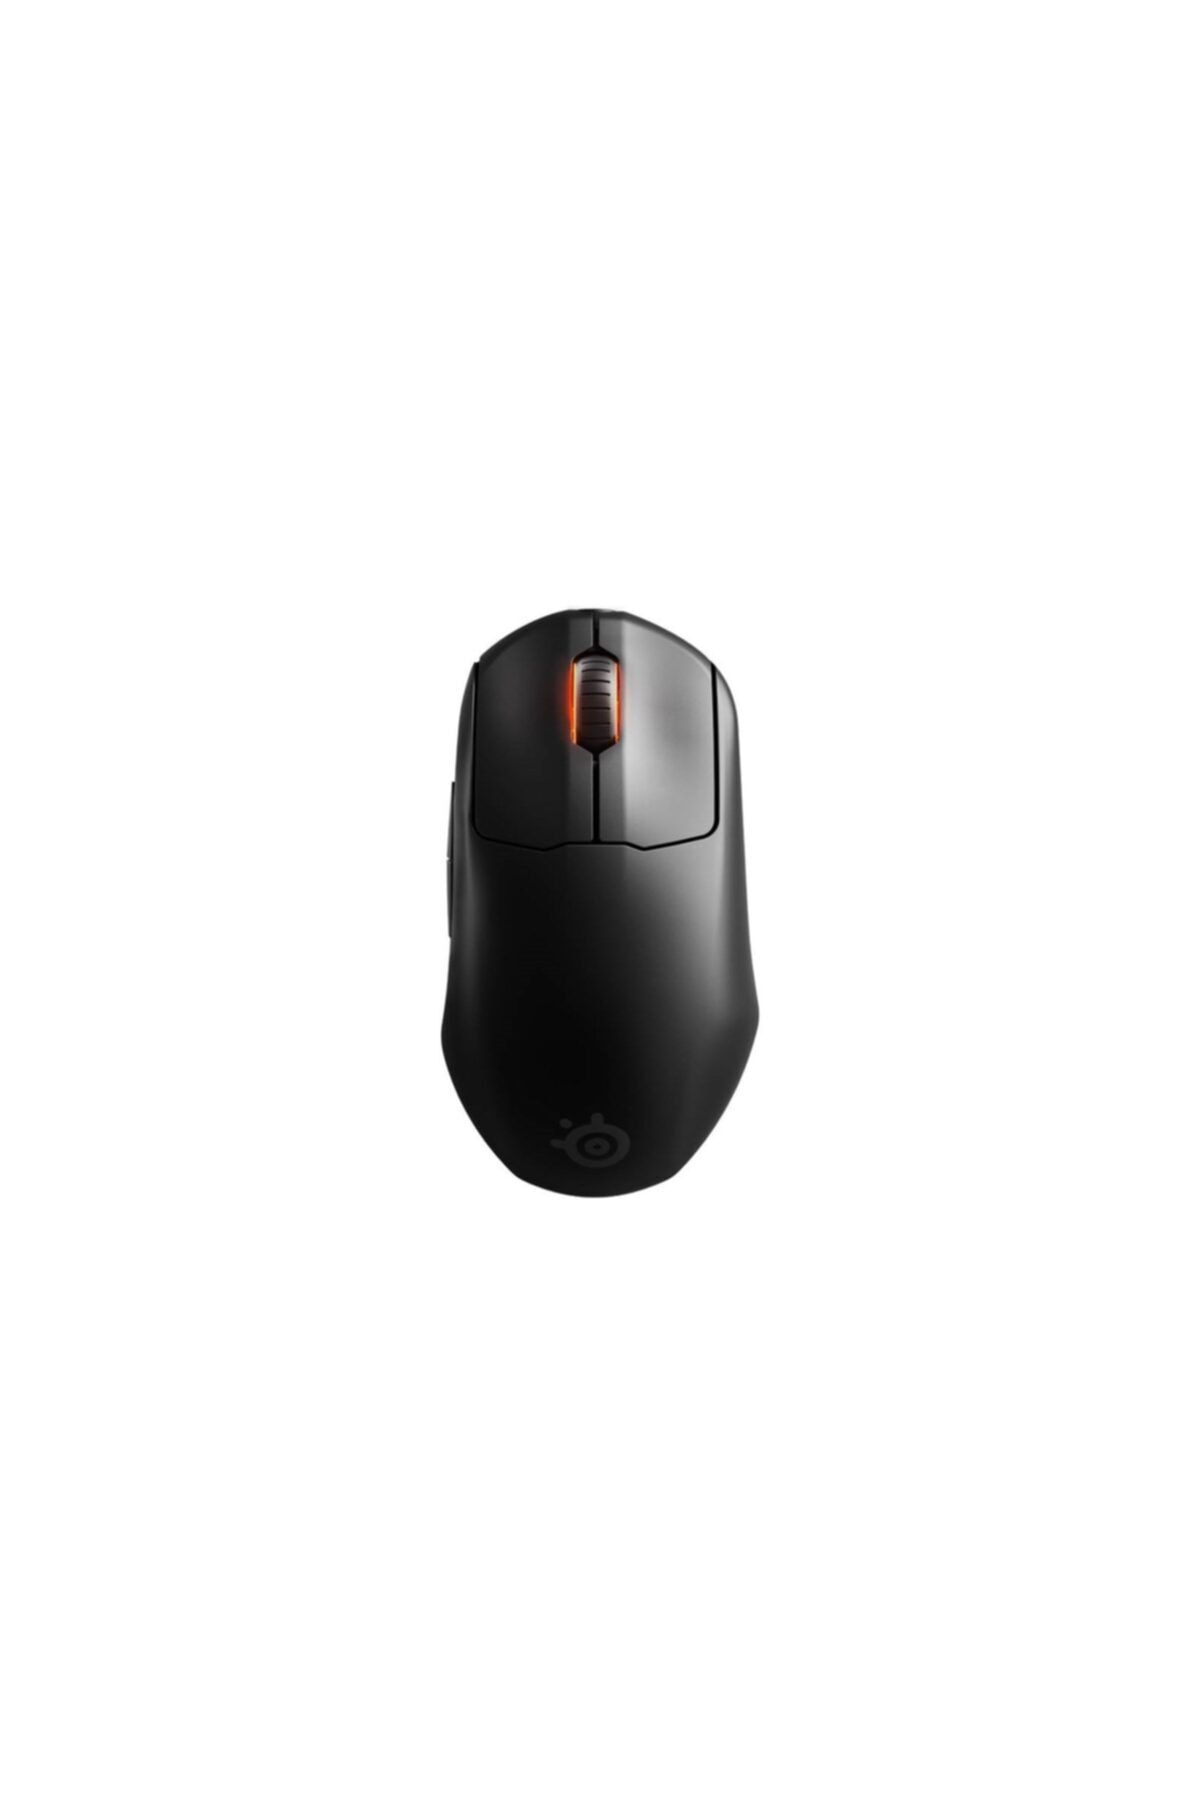 SteelSeries Prime Mini Kablosuz Gaming Mouse